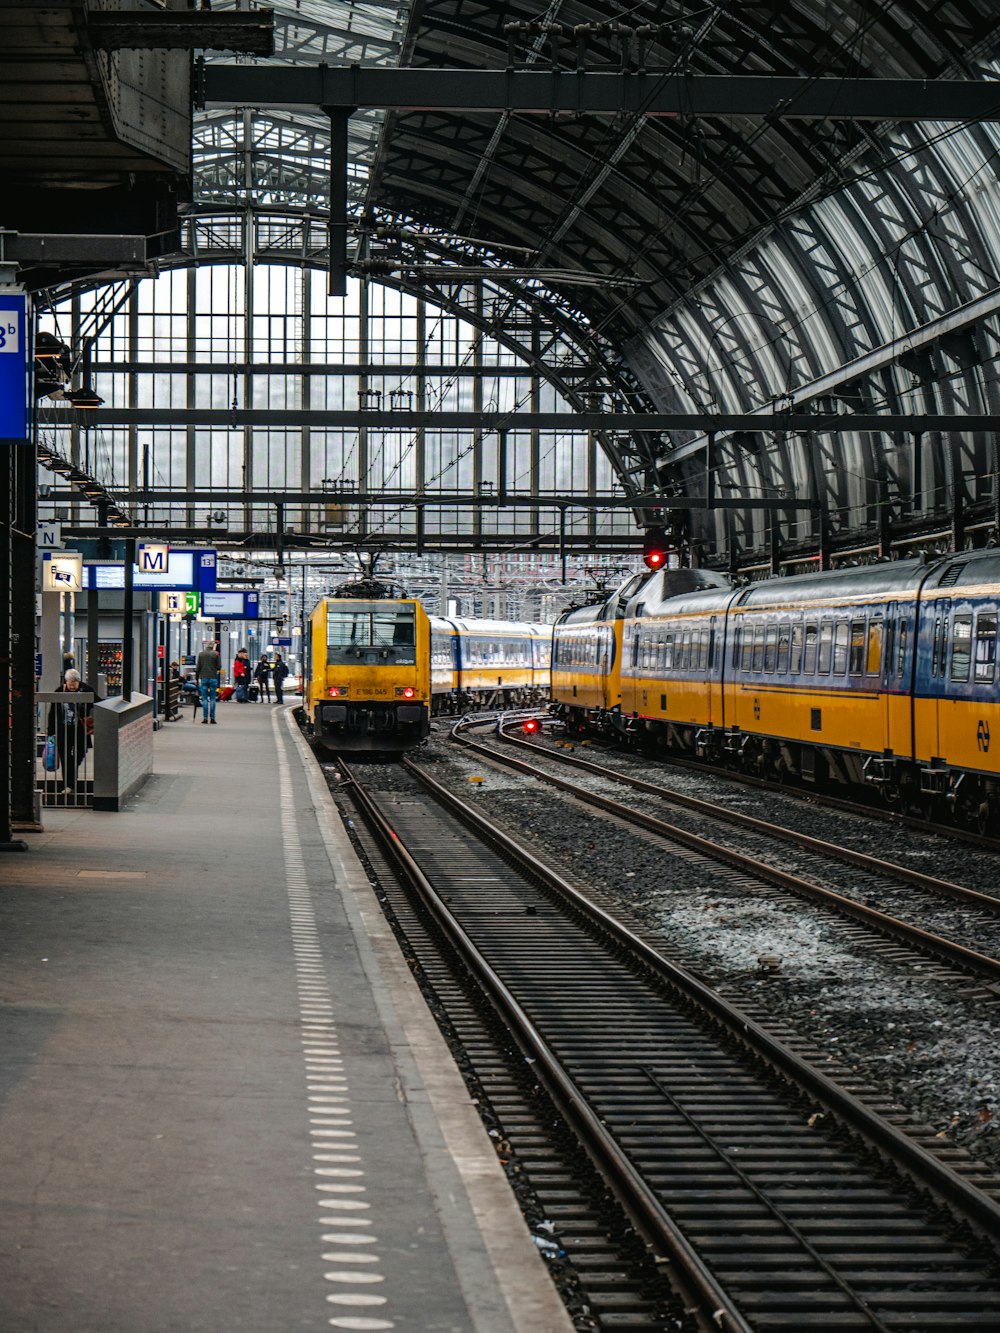 yellow trains during daytime